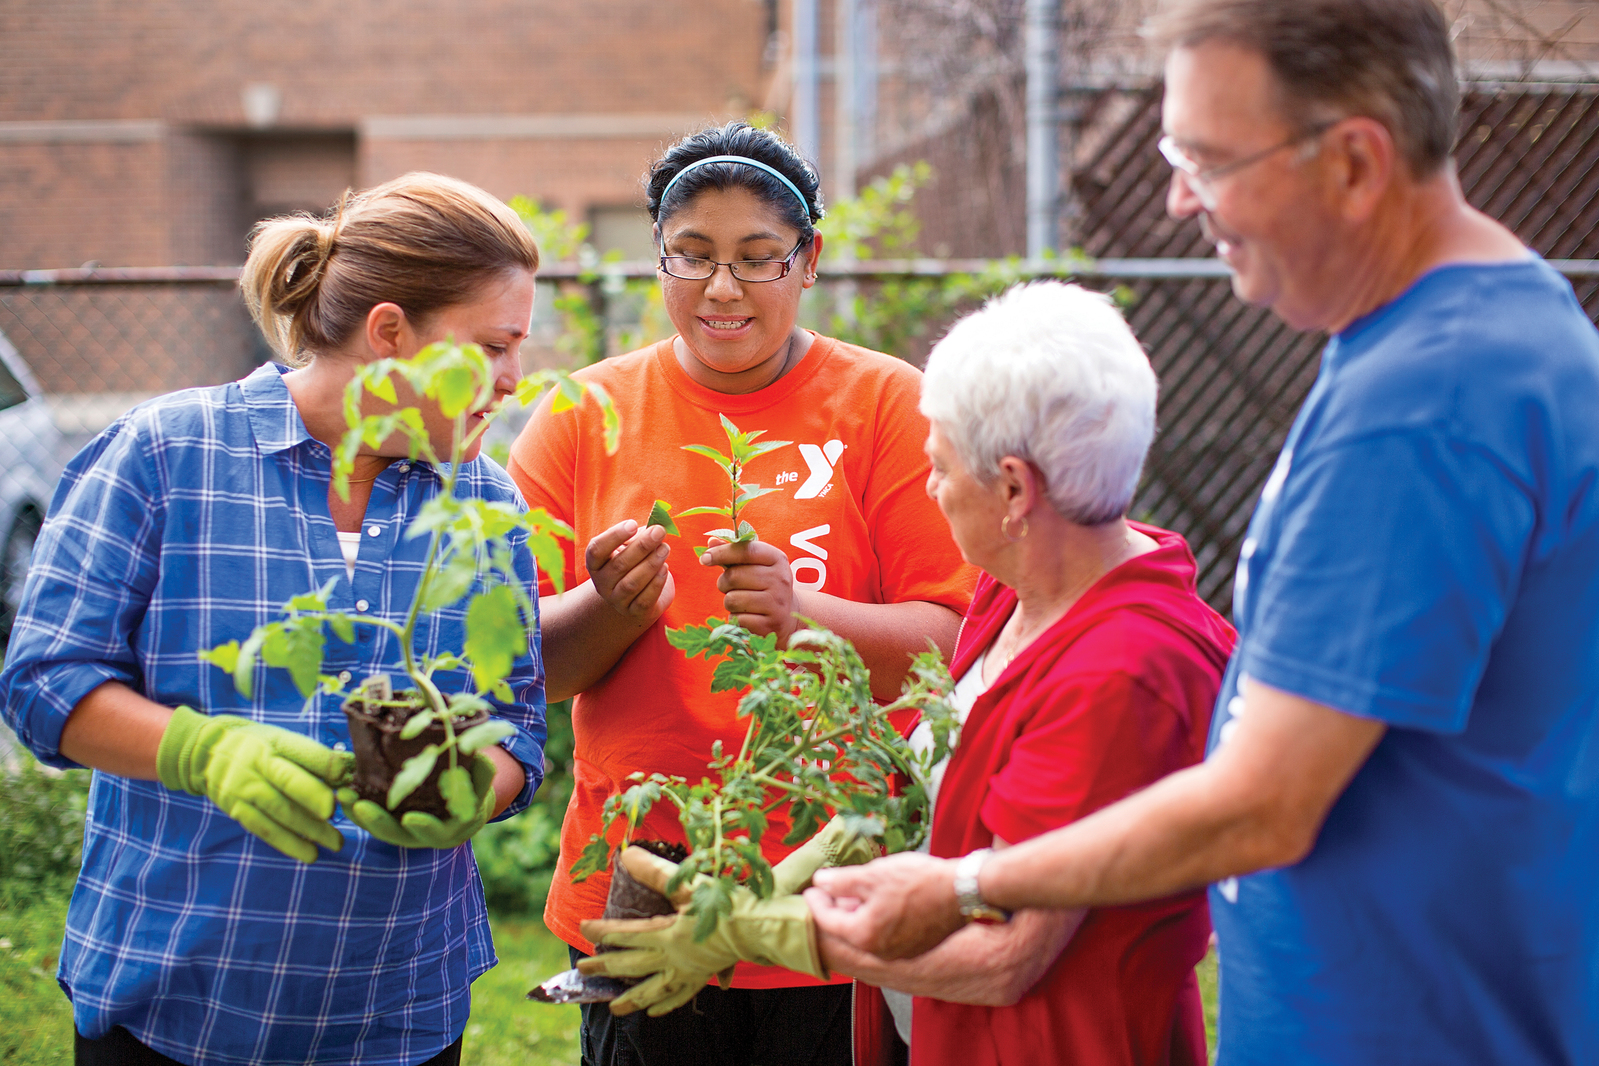 Volunteers helping the community planting plants.